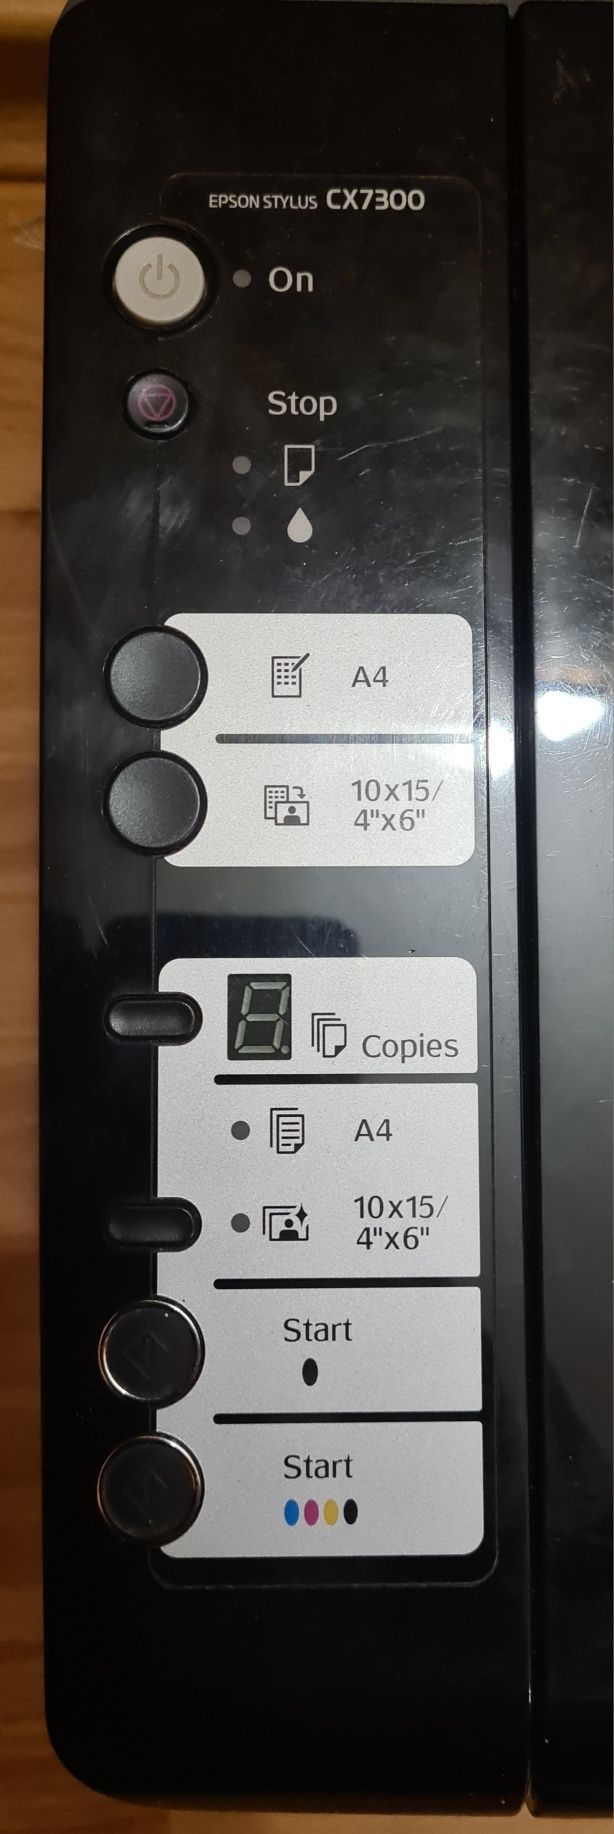 Epson CX7300 принтер/сканер/копир картриджи